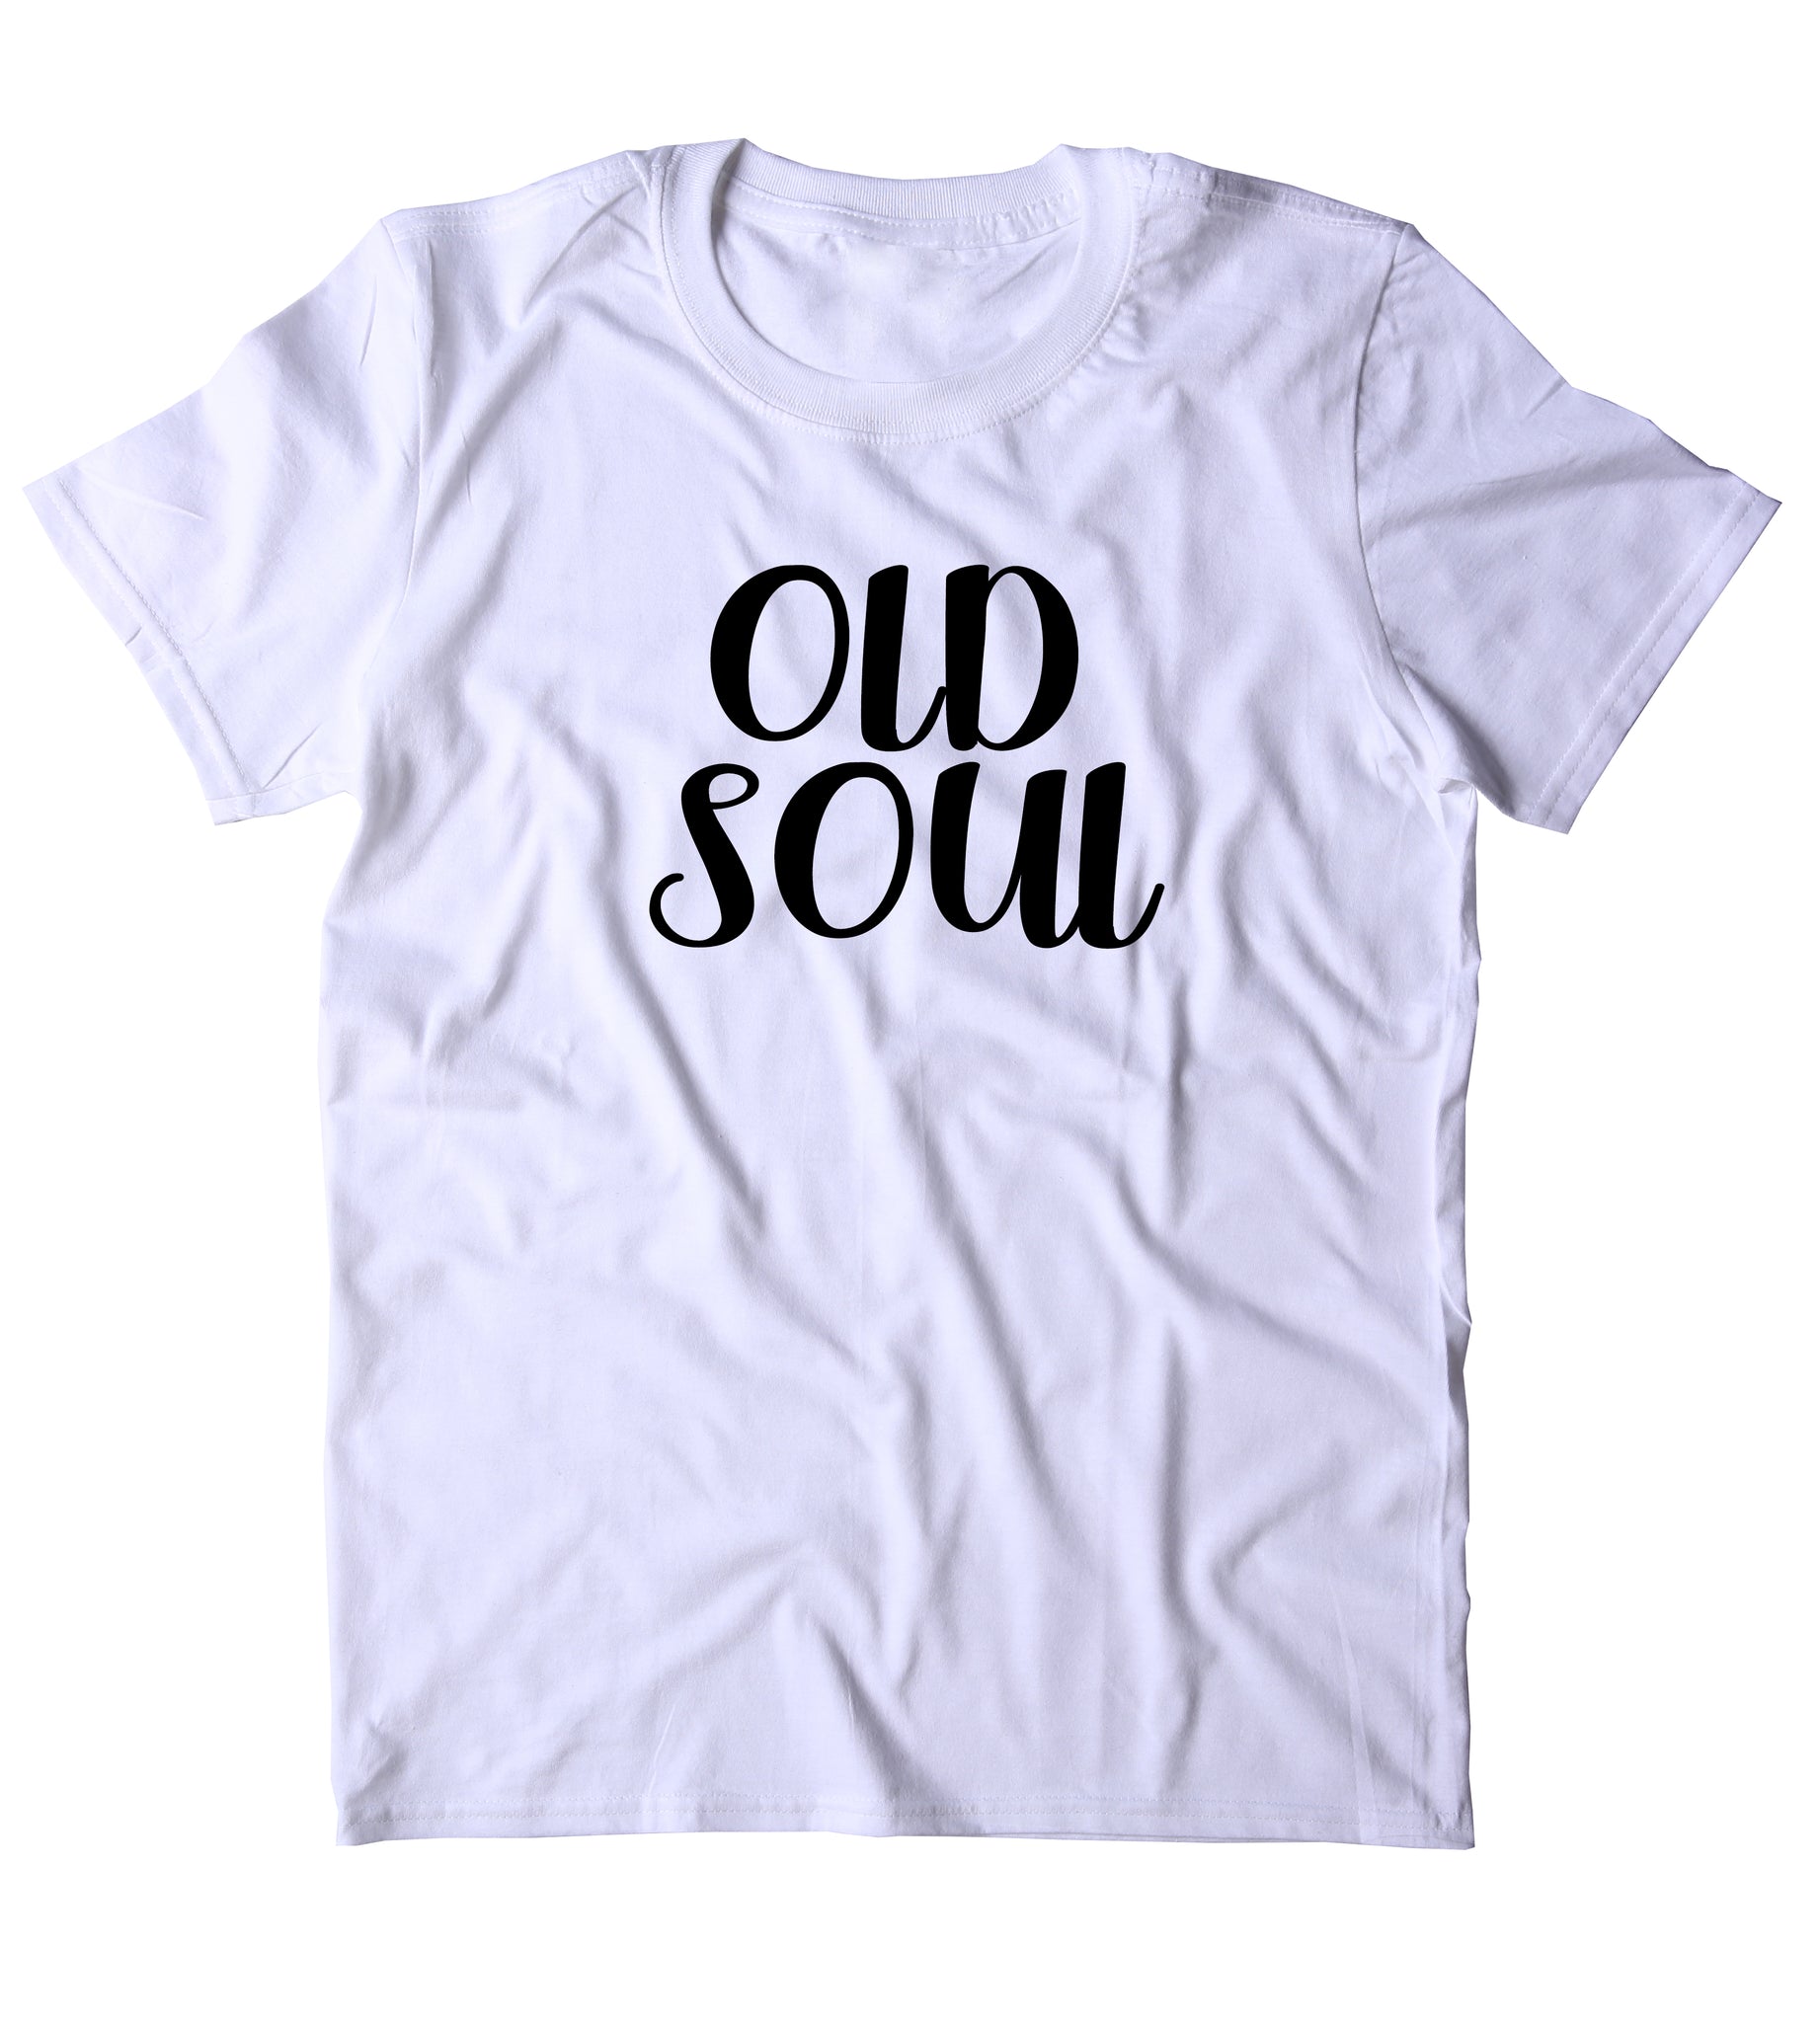 Old Soul Shirt Hippie Bohemian Boho Free Spirit Yoga Clothing T-shirt ...